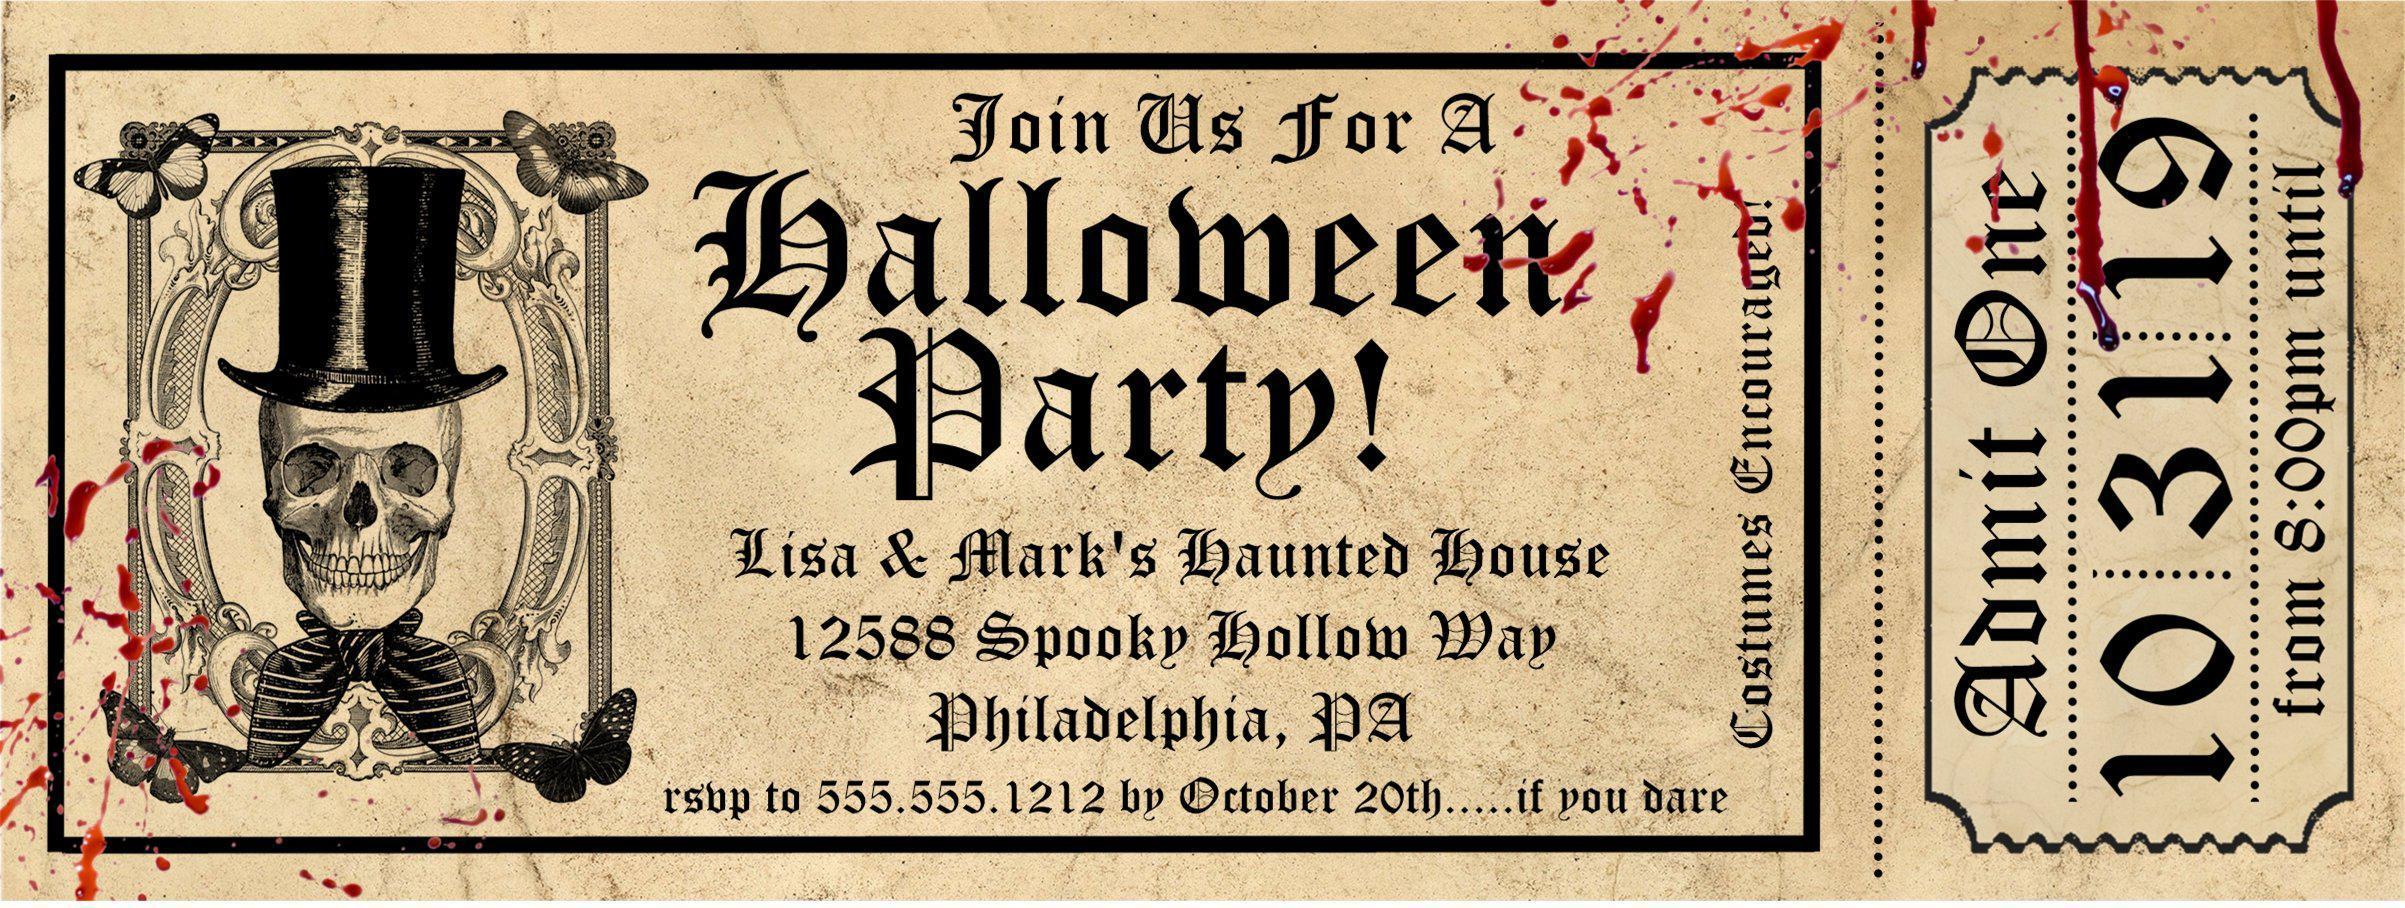 Halloween Party Ticket Invitations